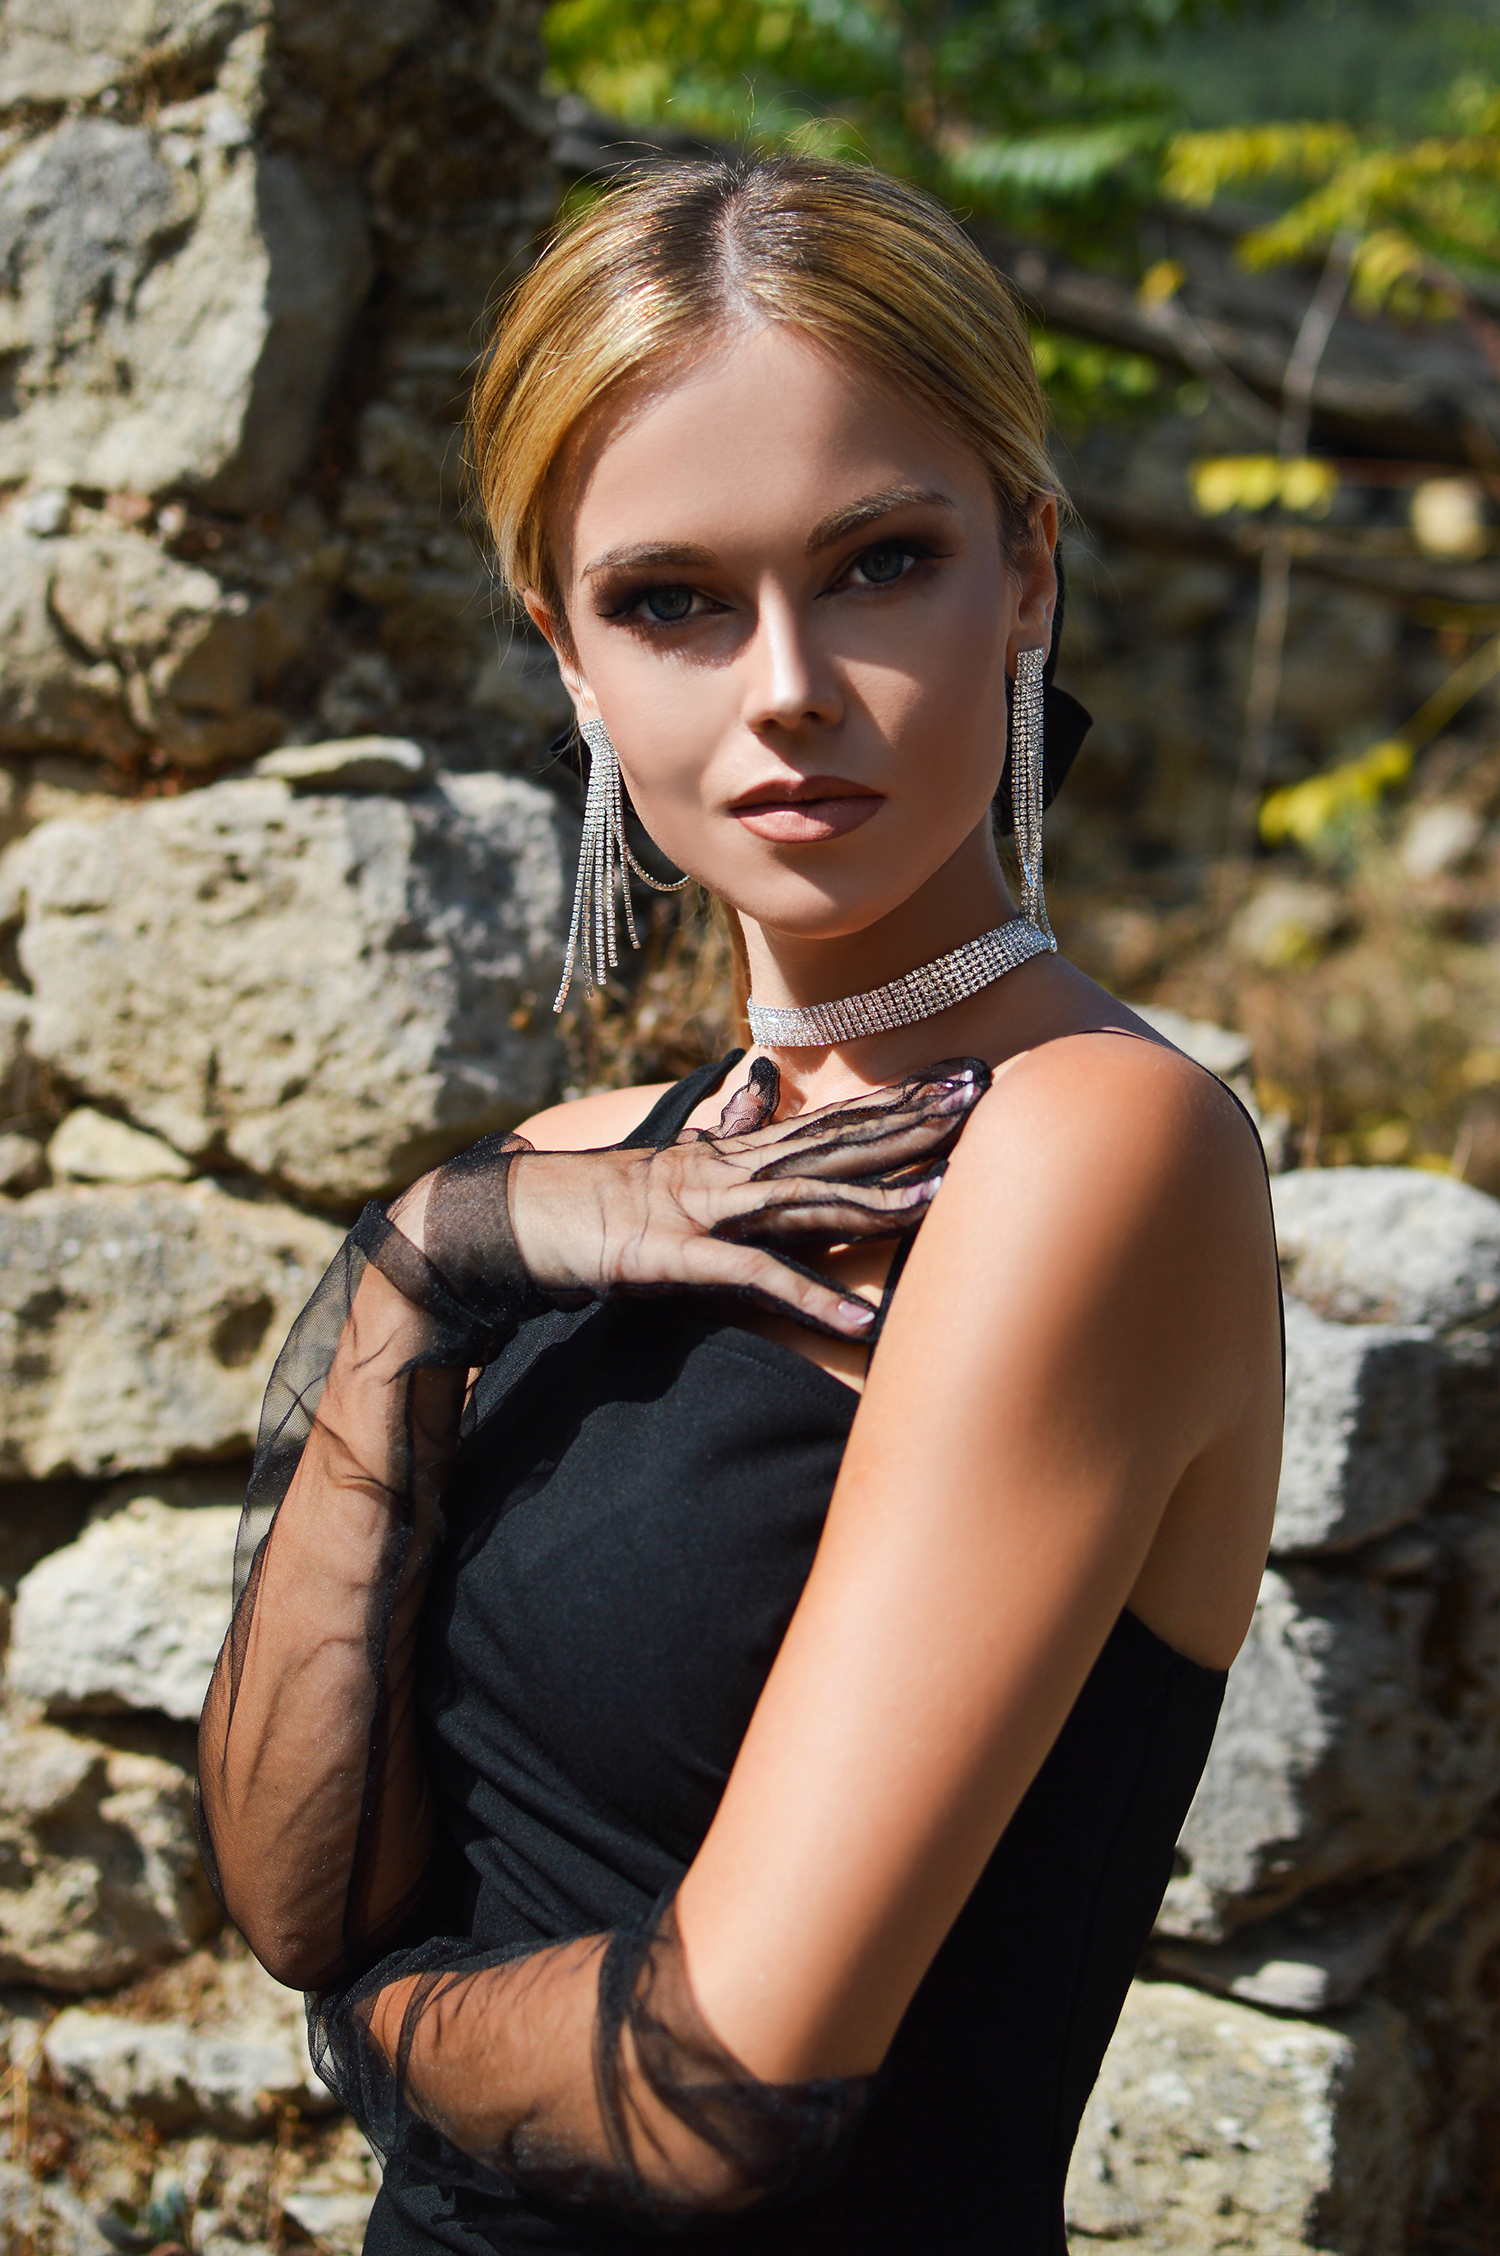 Classy and Elegant Black Gown by Tamara Bellis